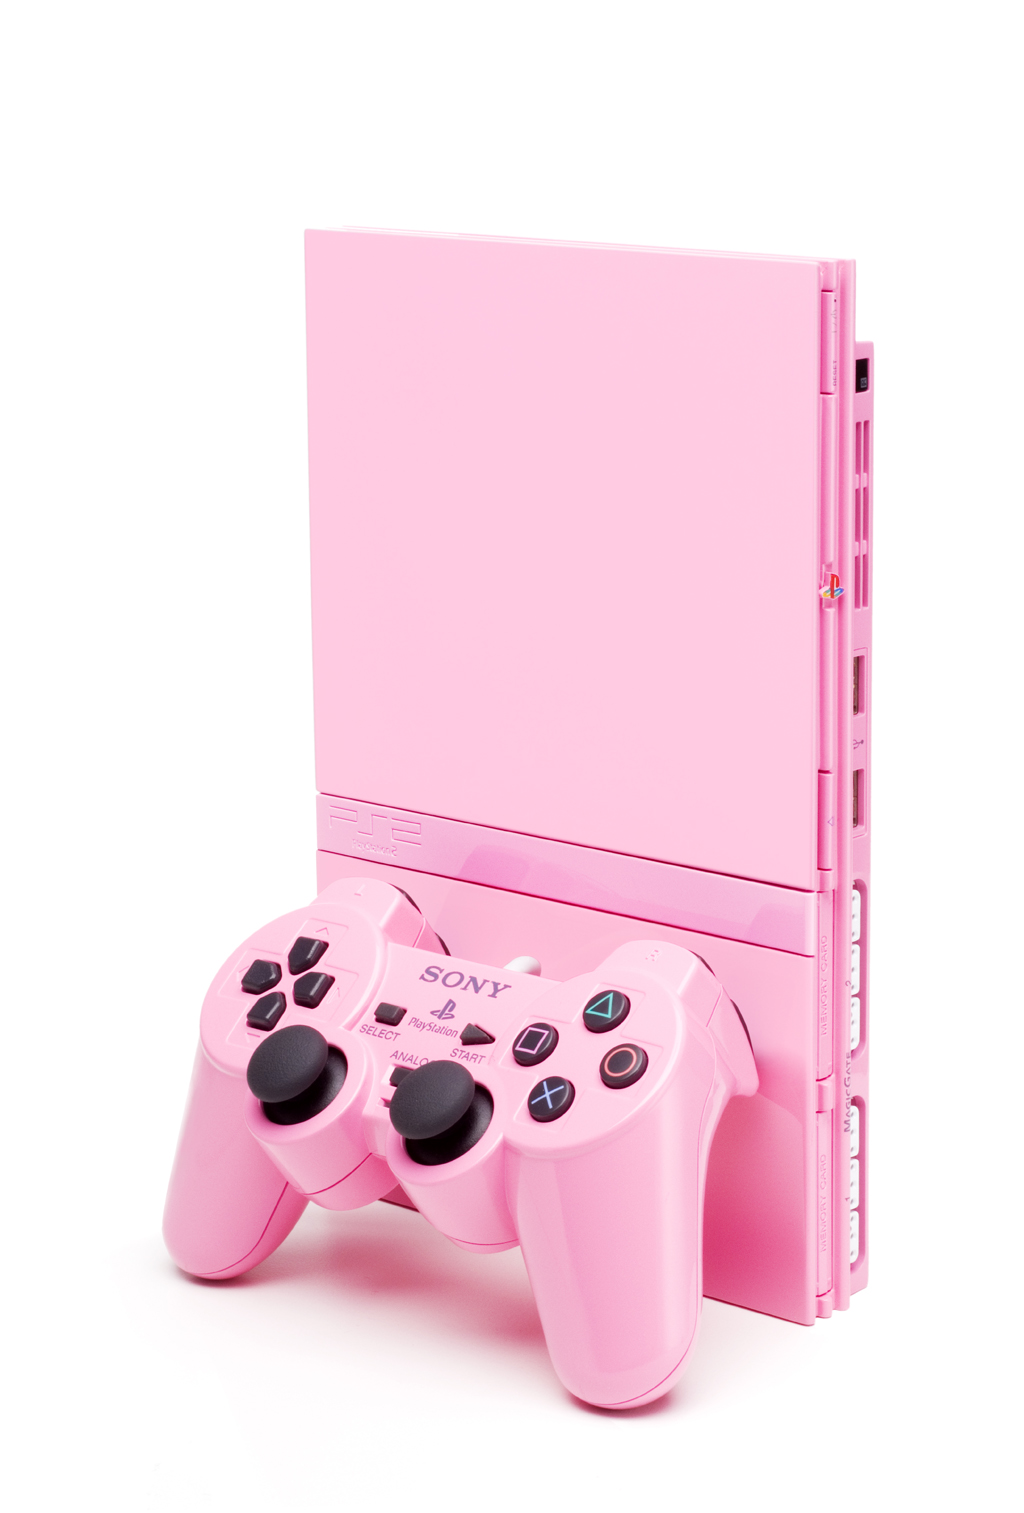 Pink Playstation 2